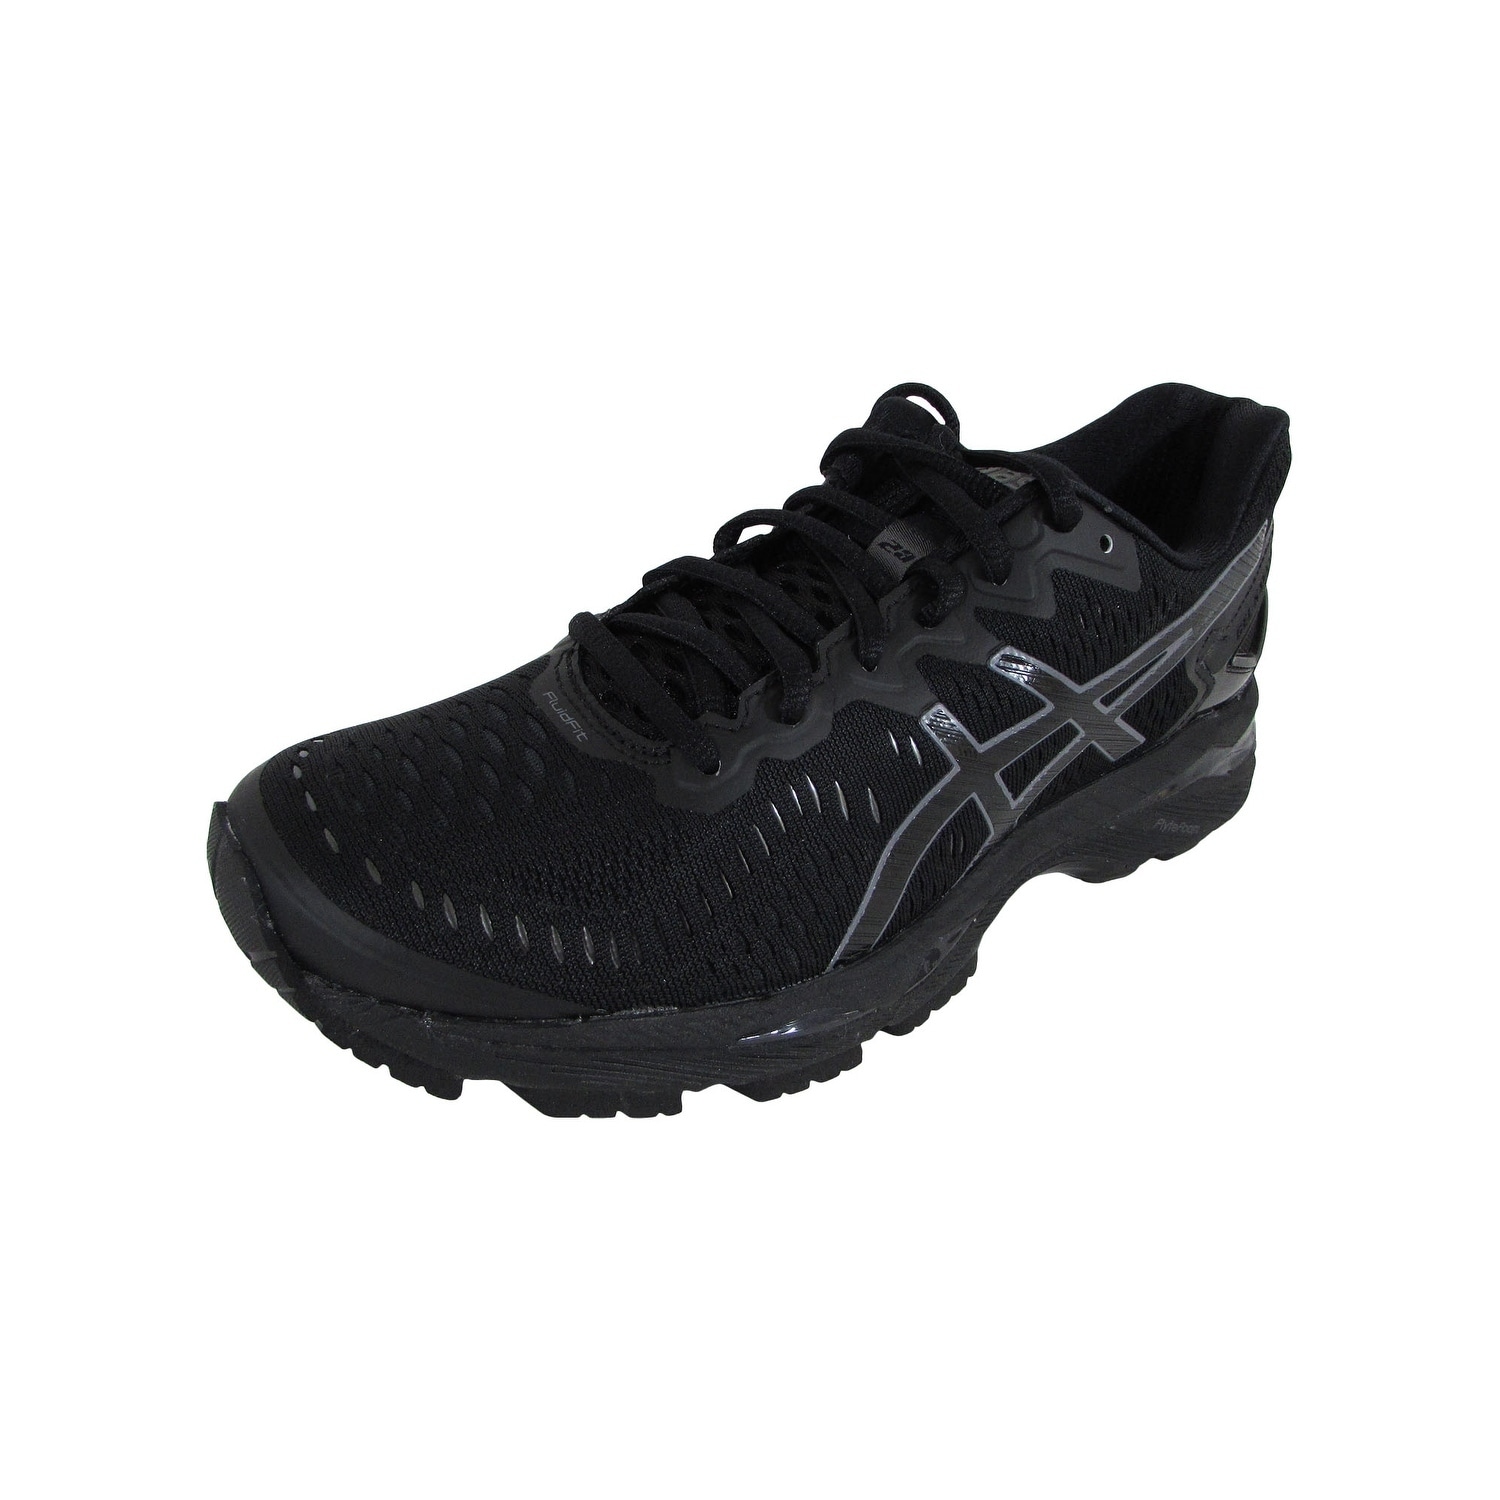 asics women's walking shoes black